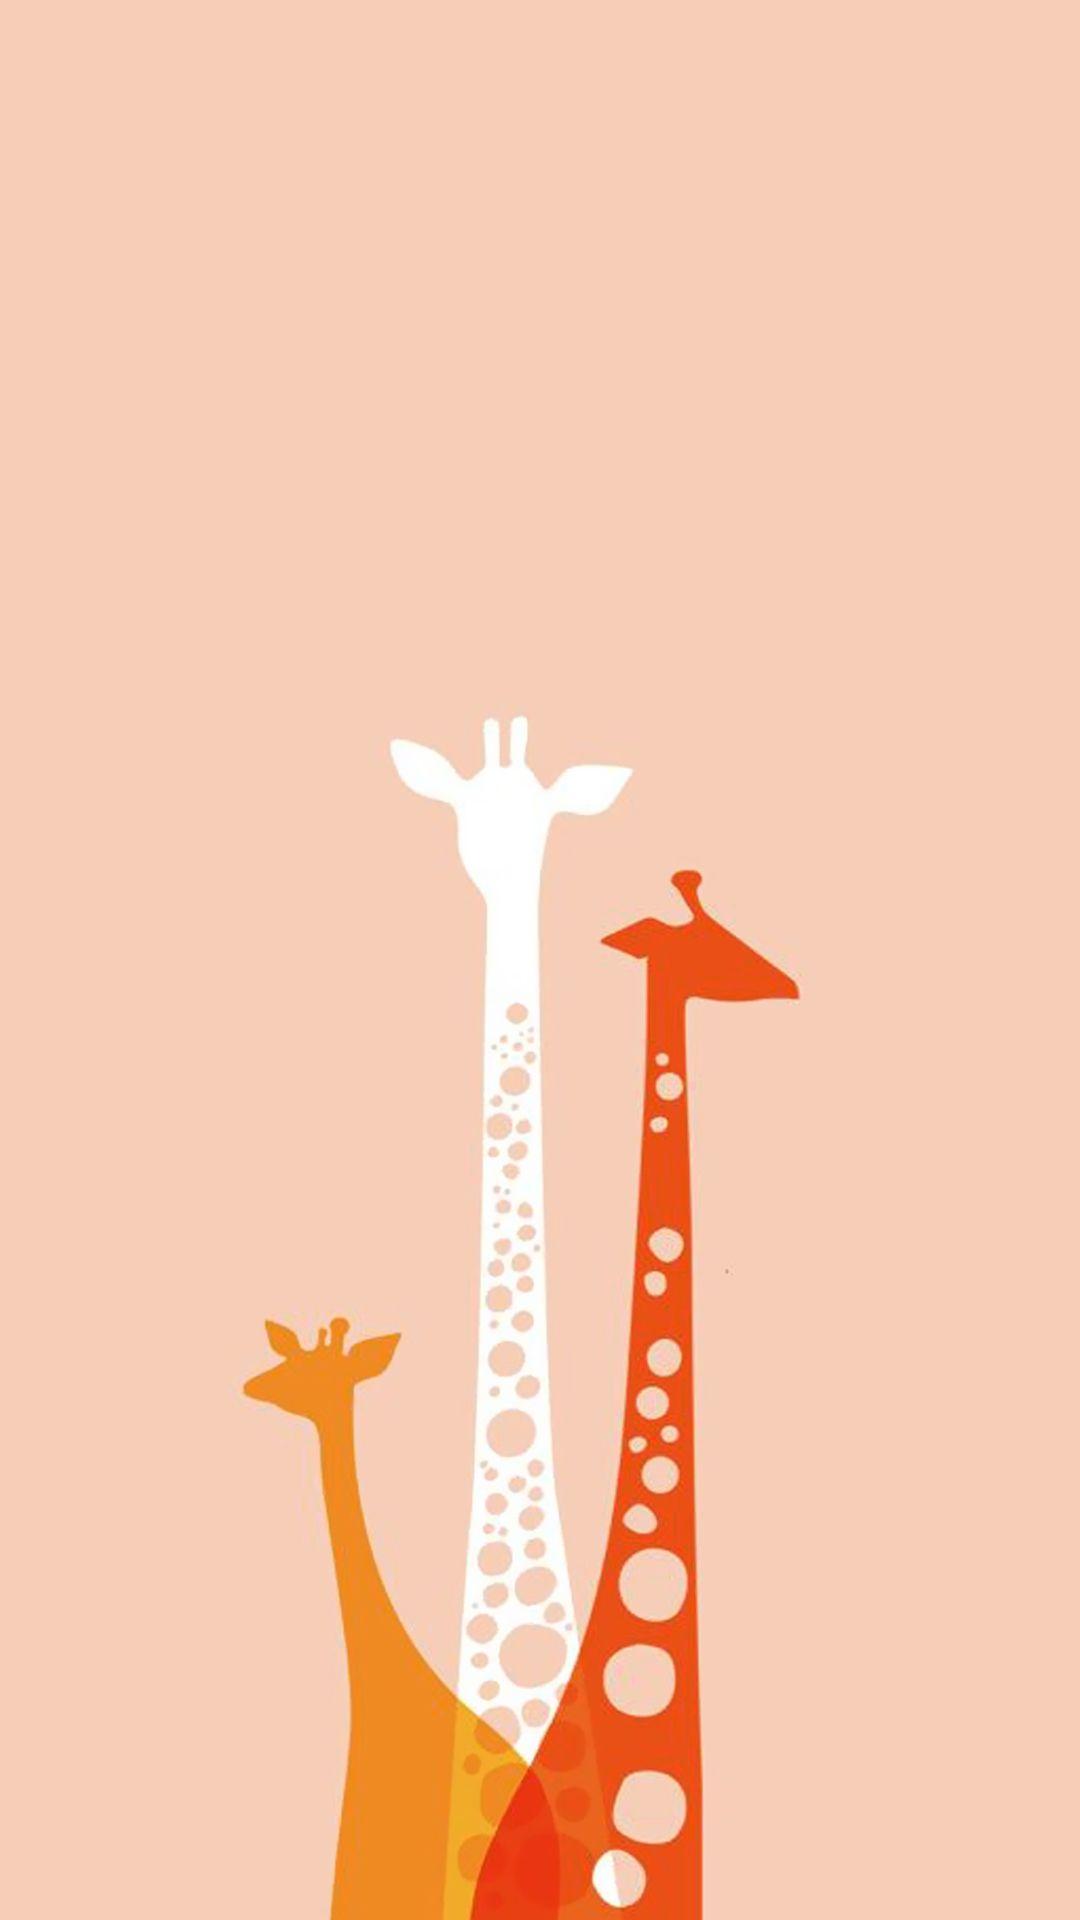 Cute animal giraffe wallpaper. Cute wallpaper background, iPhone background image, Sunflower wallpaper